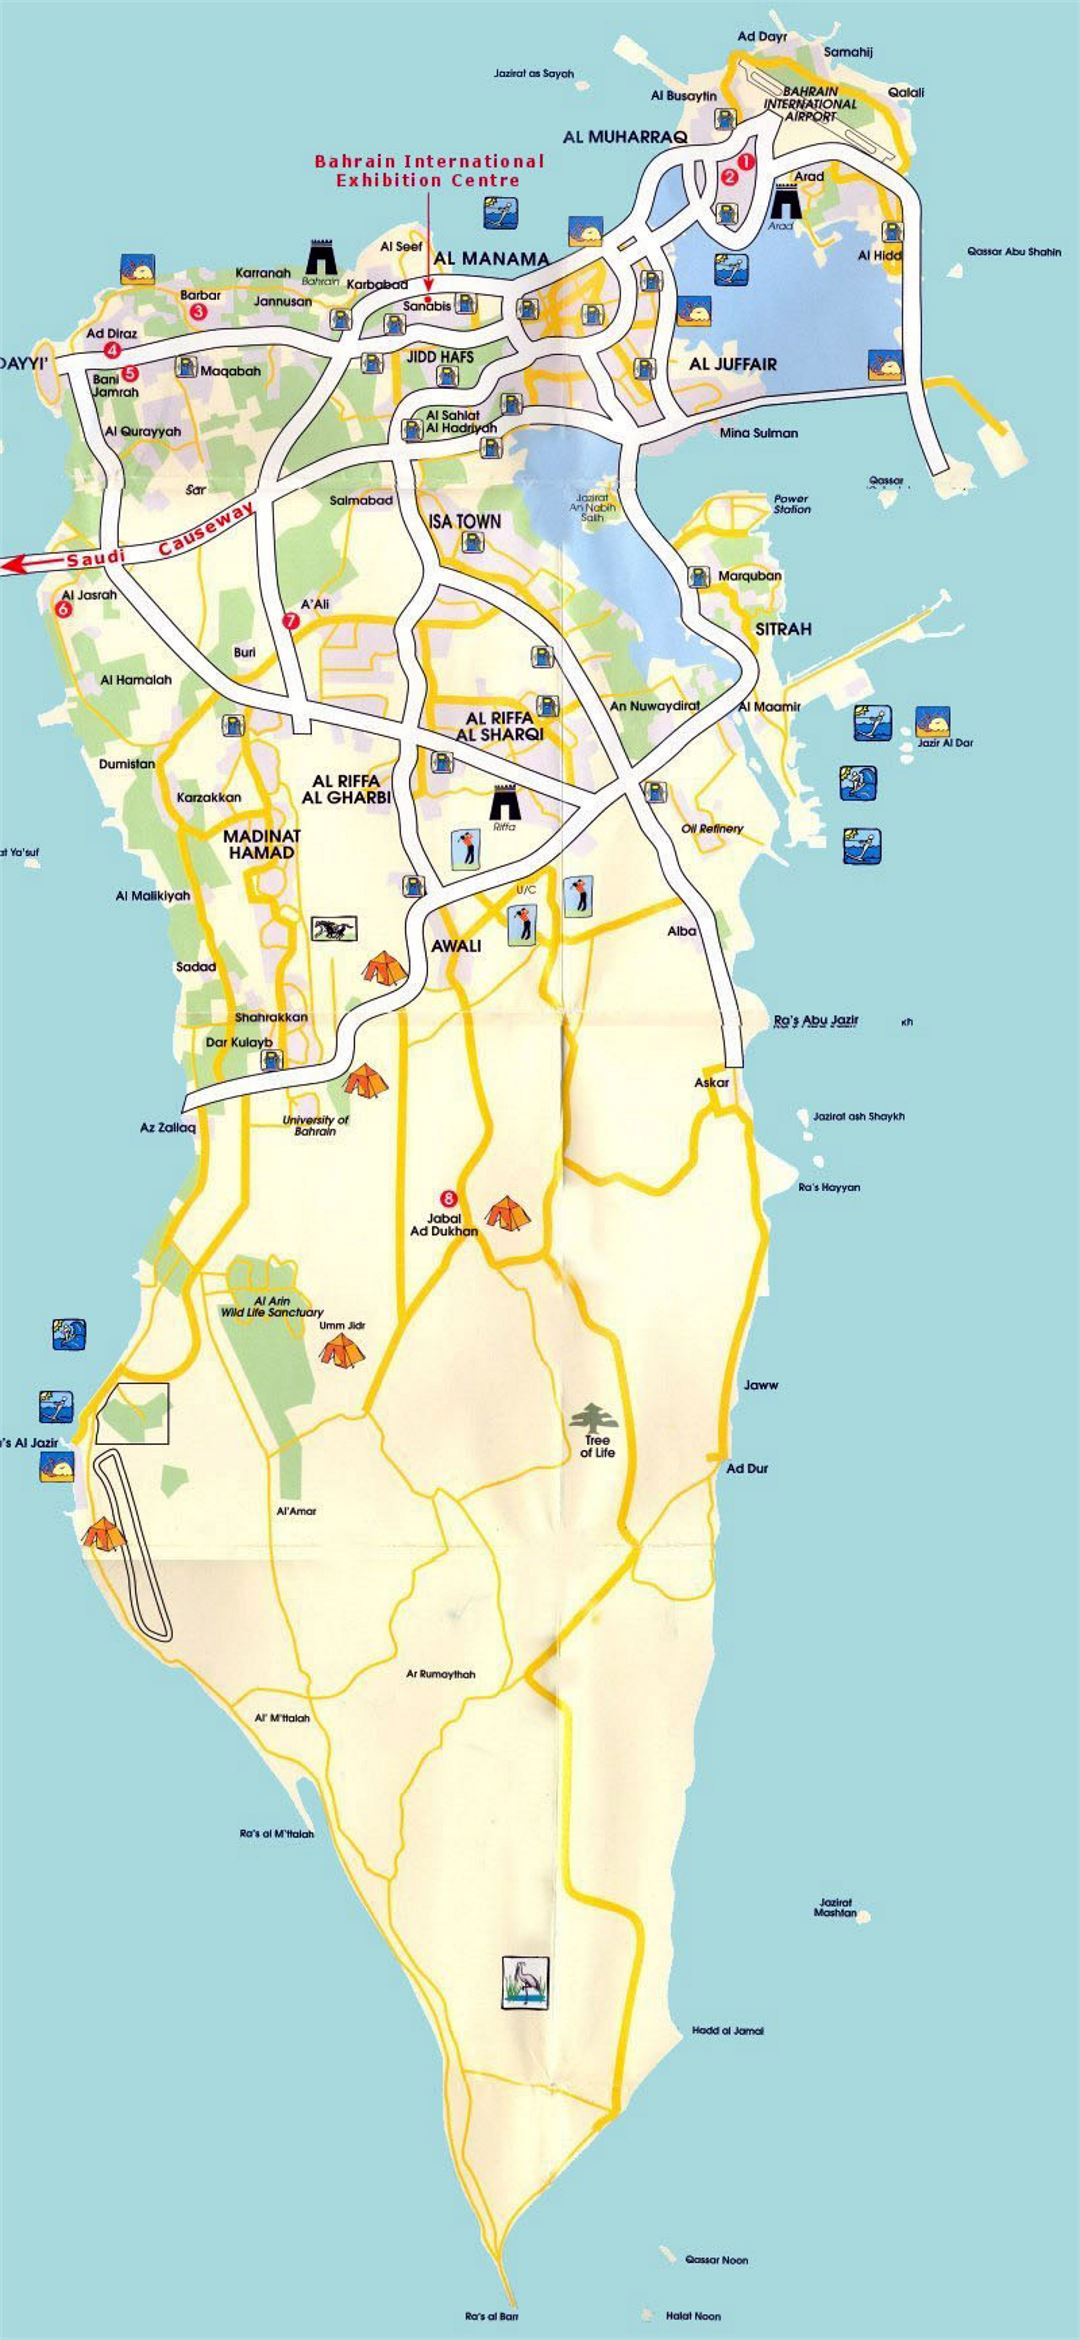 Detallado mapa turístico de Bahrein con carreteras